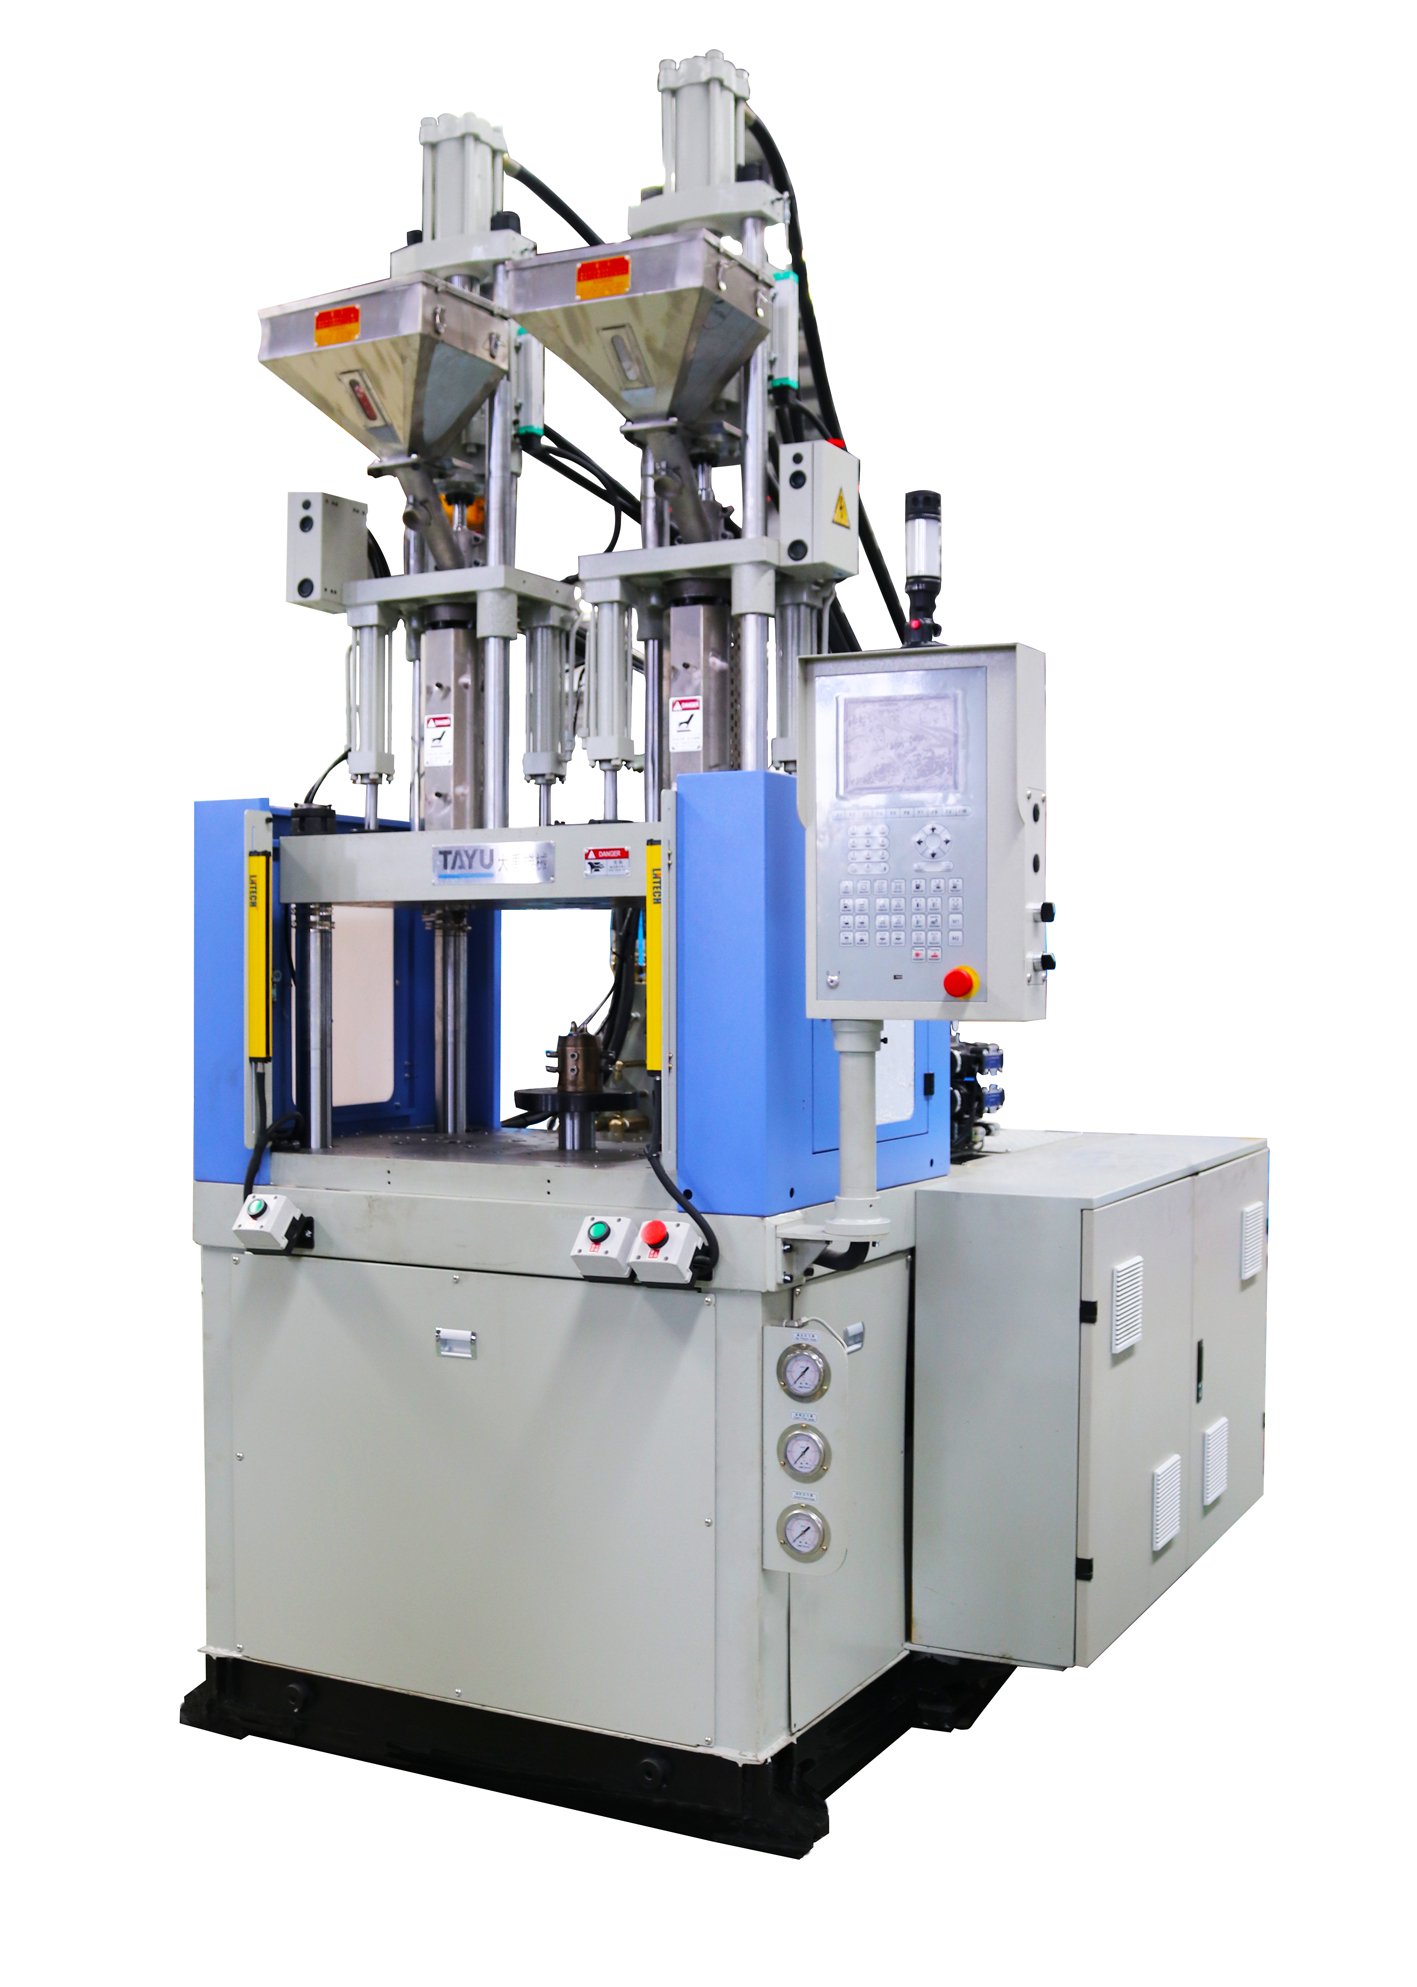 TY-1000.ZT.2C vertical injection molding machine